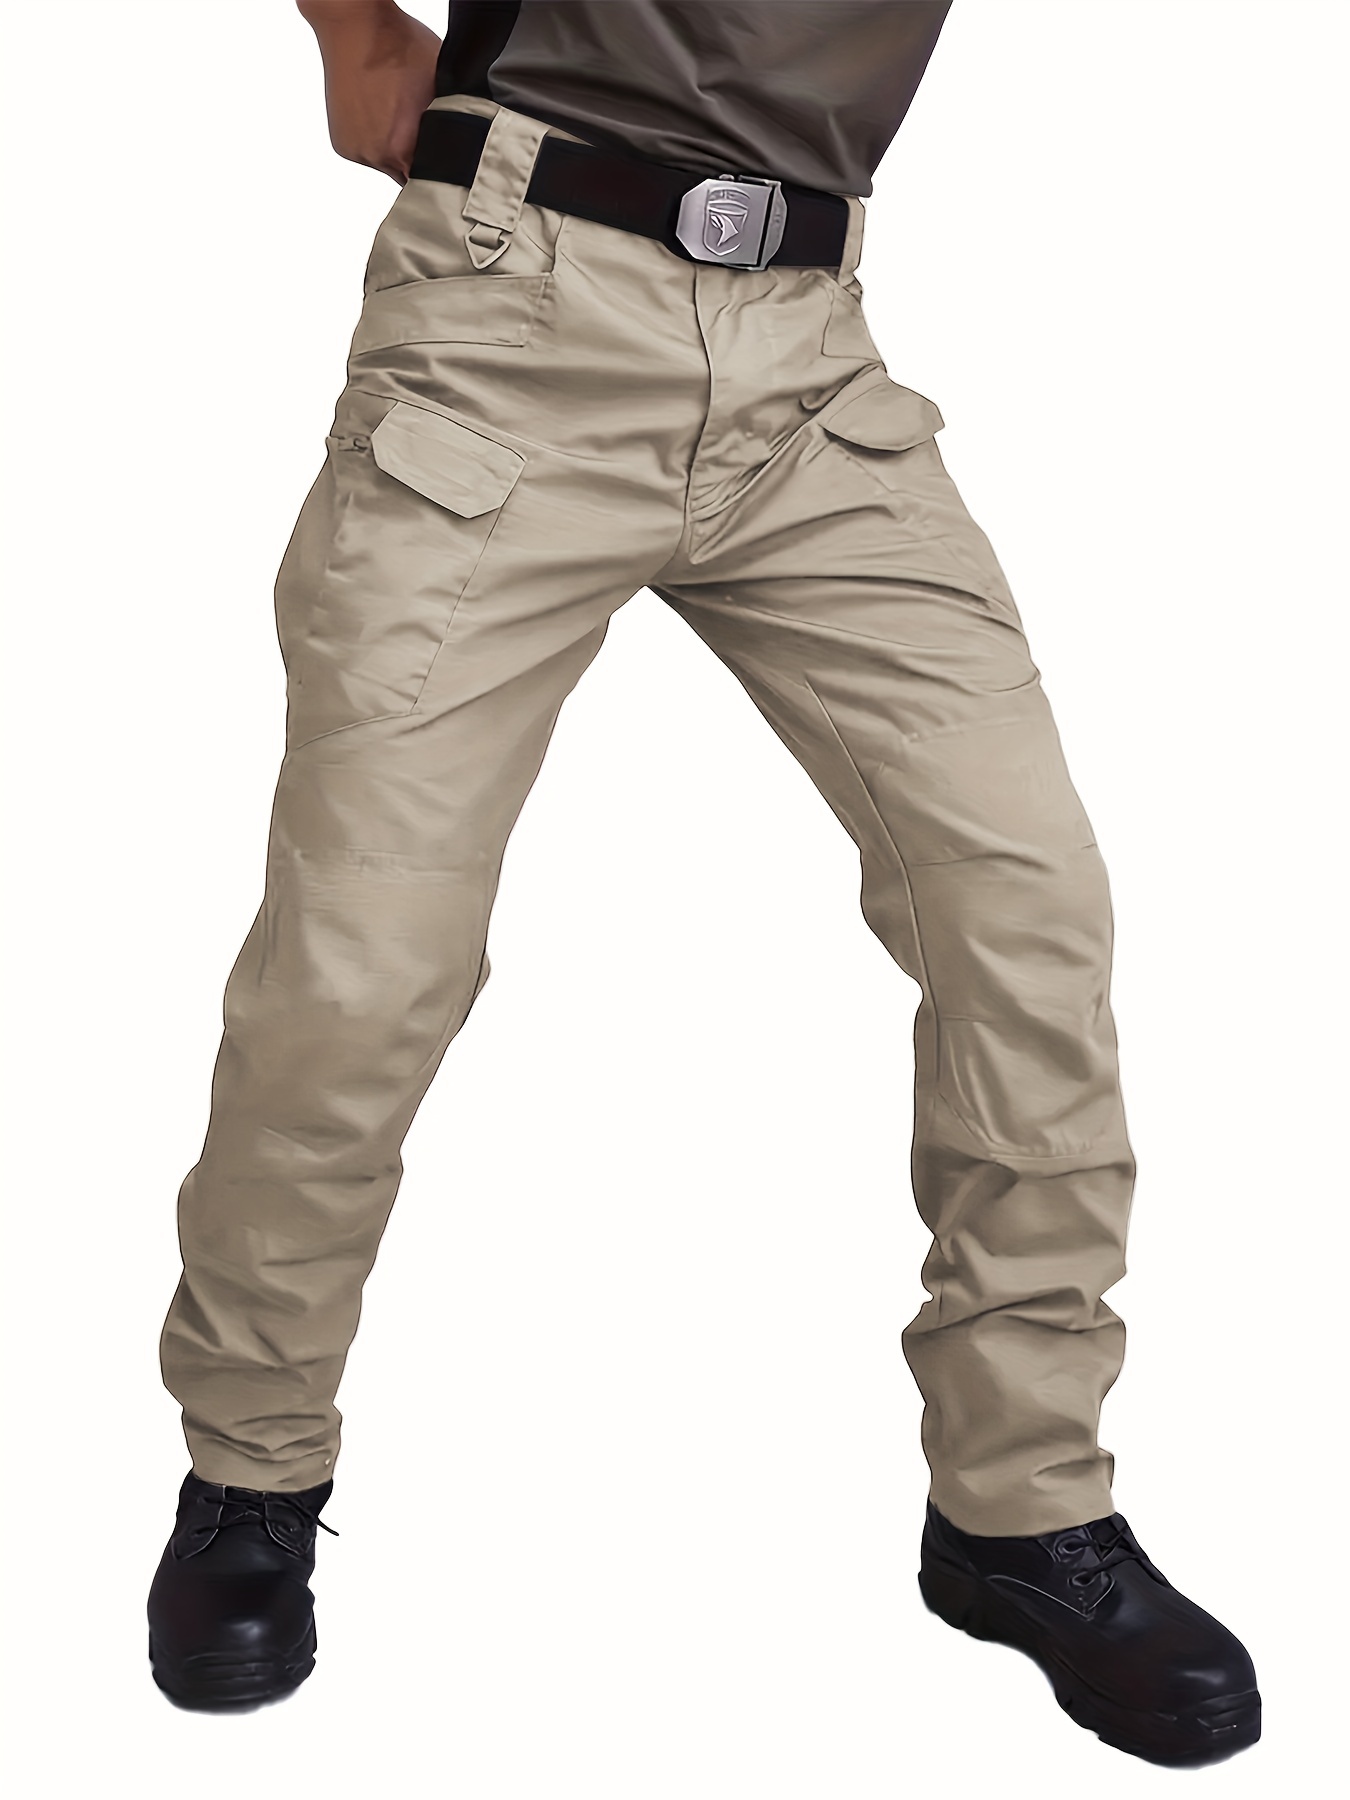 Pantalón Industrial Con Bolsas Tipo Cargo tácticos militares impermeables,  pantalones de senderismo para exteriores bolsillos dobles profundos y  bolsillos delanteros pequeños, Moda de Mujer